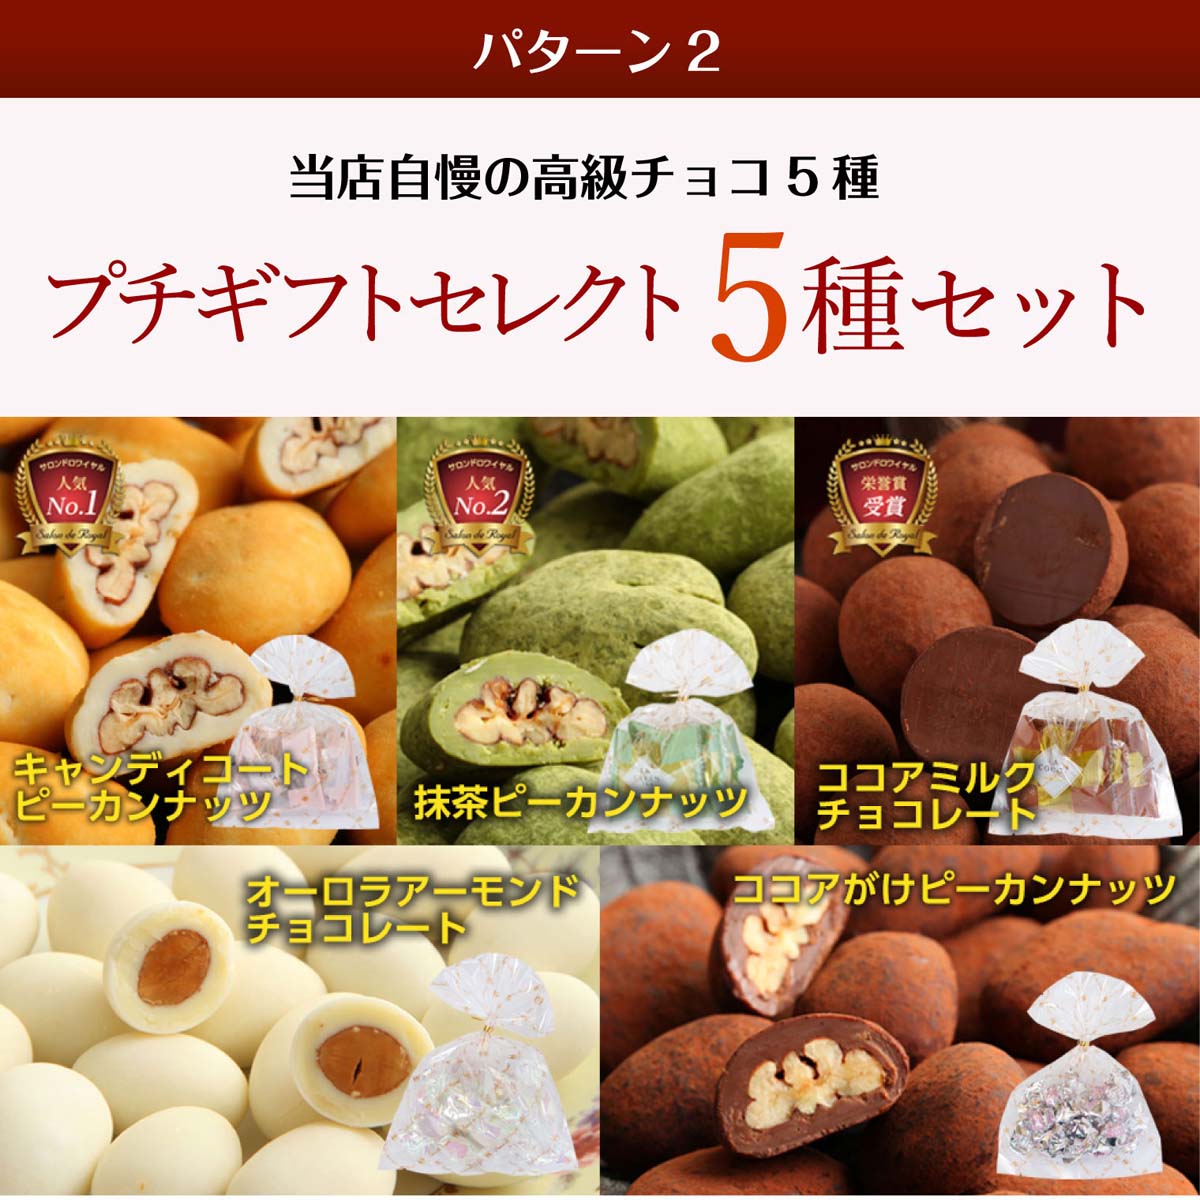 [Salon de Royal] Kyoto Premium Chocolate and Nuts Selection + 5 Logo Gift Bags